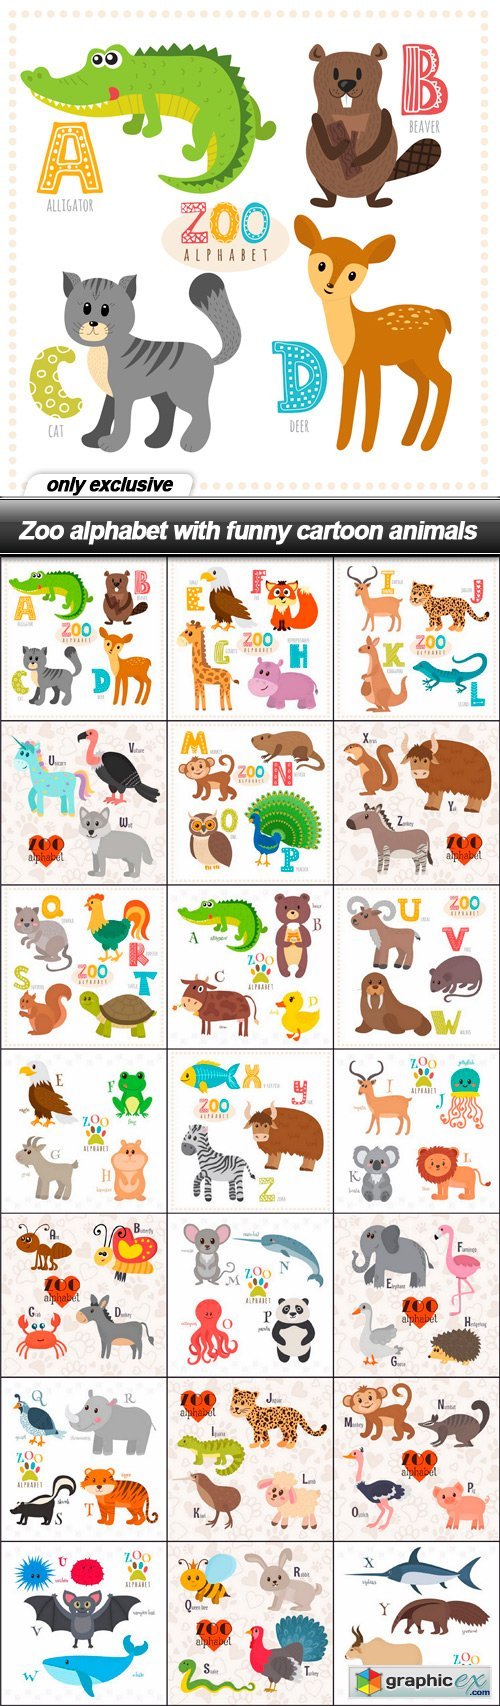 Zoo alphabet with funny cartoon animals - 21 EPS